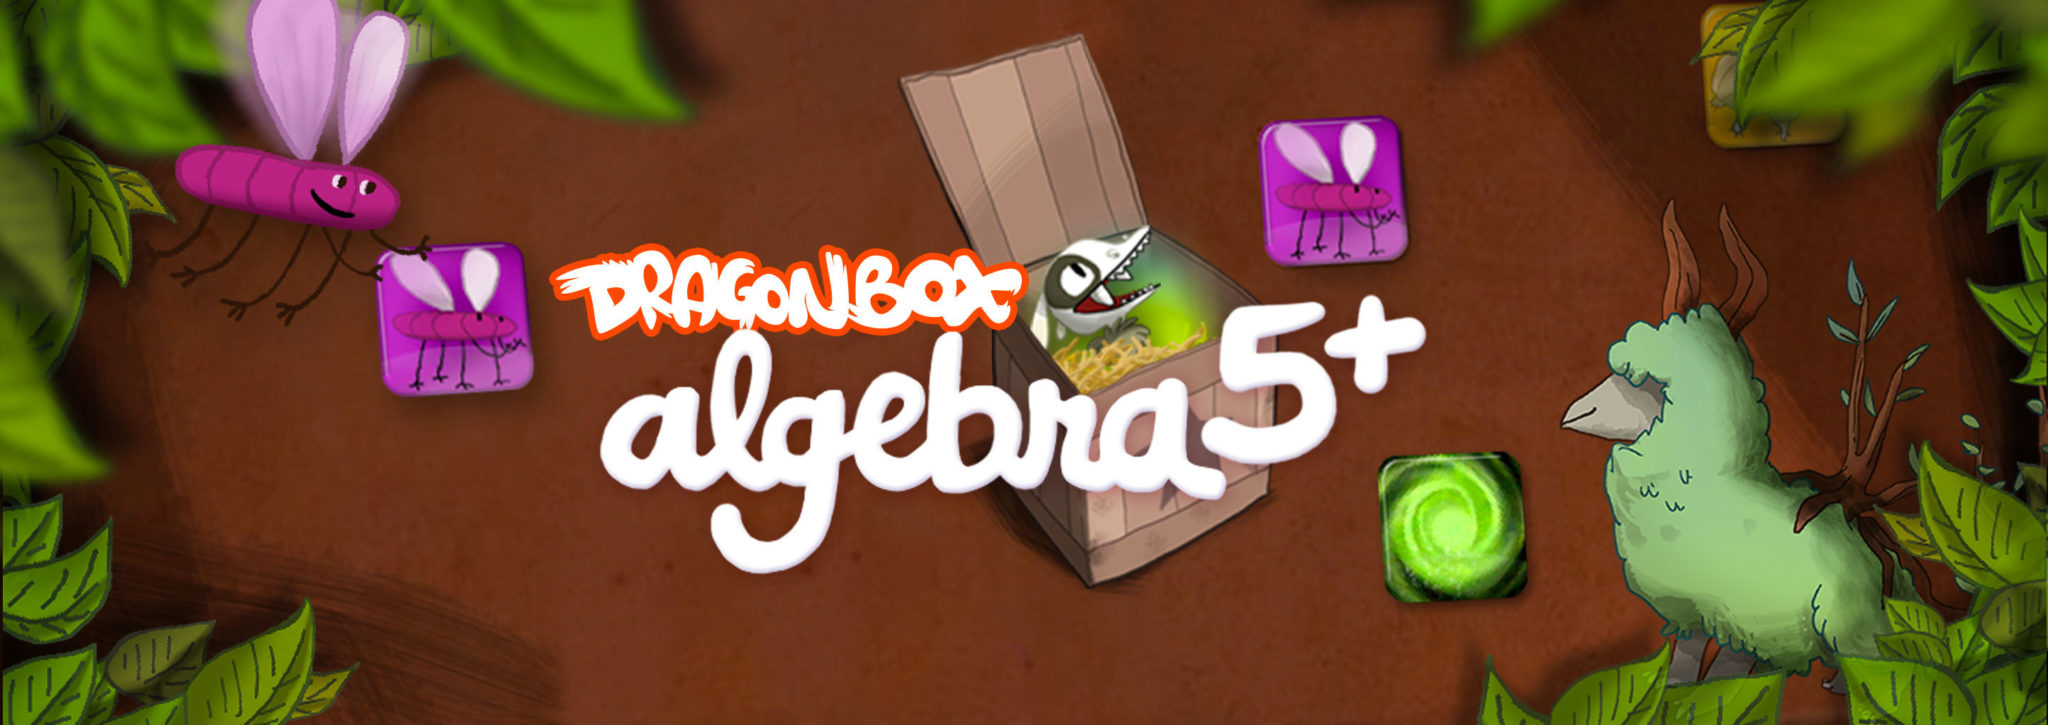 DragonBox Algebra 5+